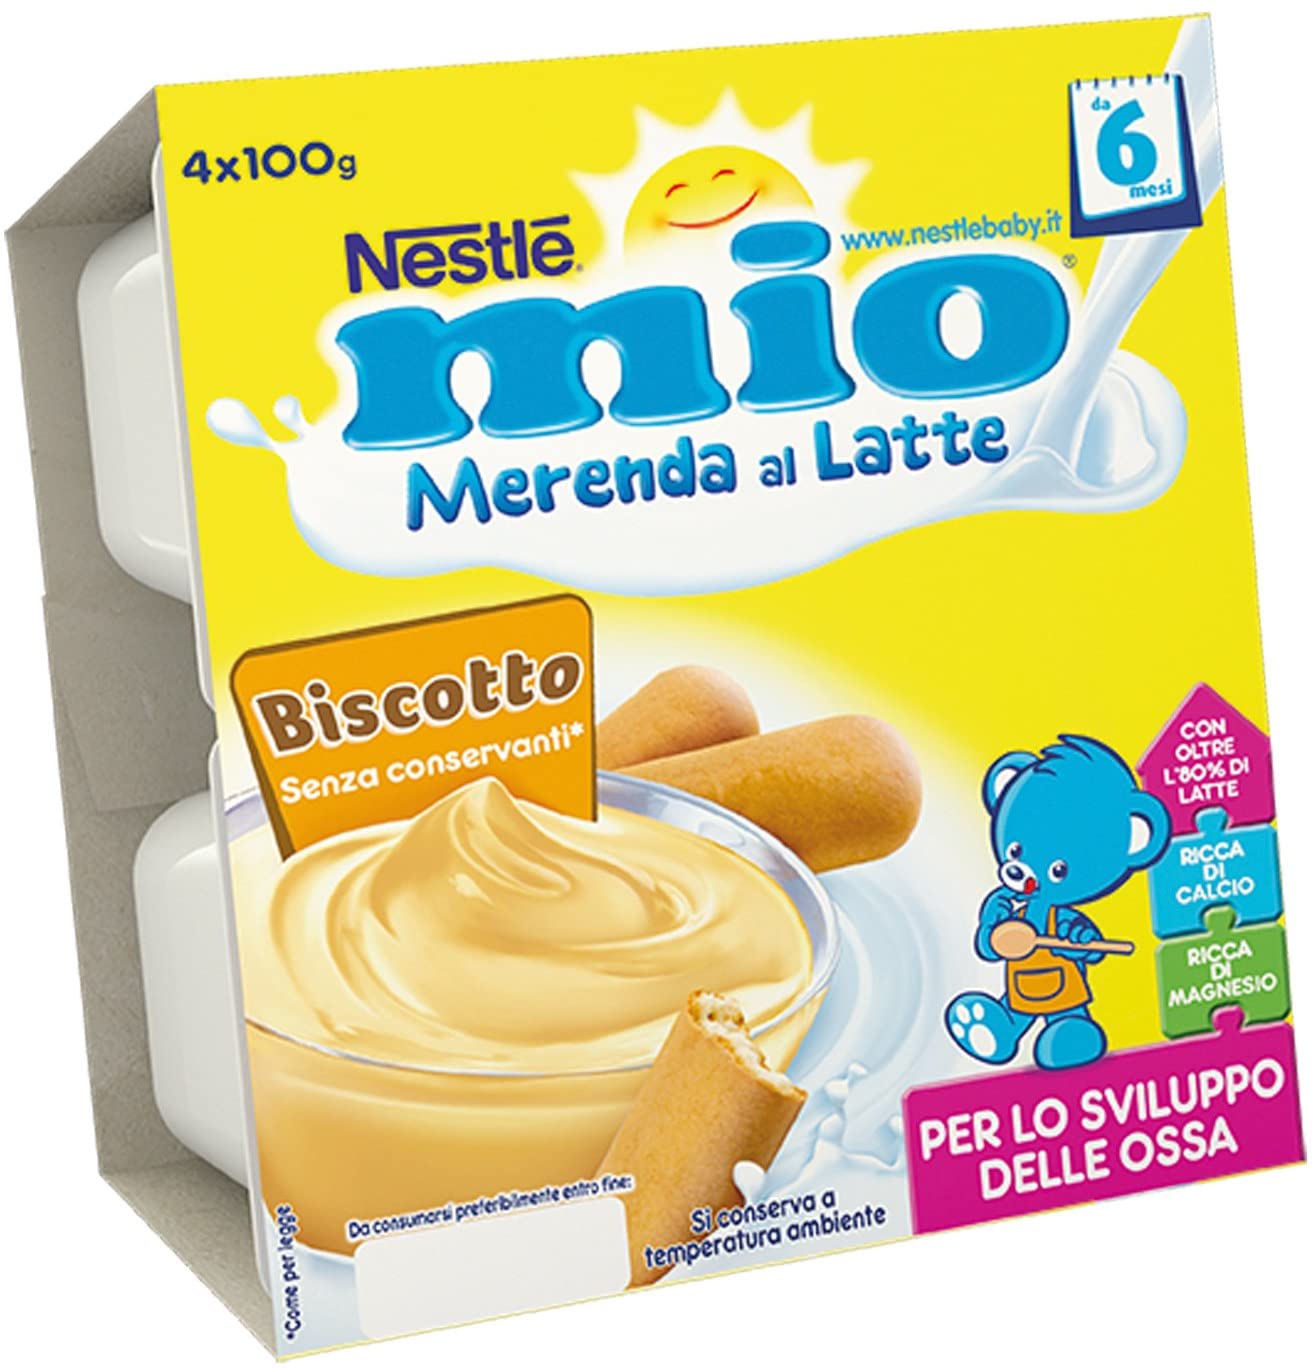 Image of mio Merenda al Latte Nestlé Biscotto 4x100g